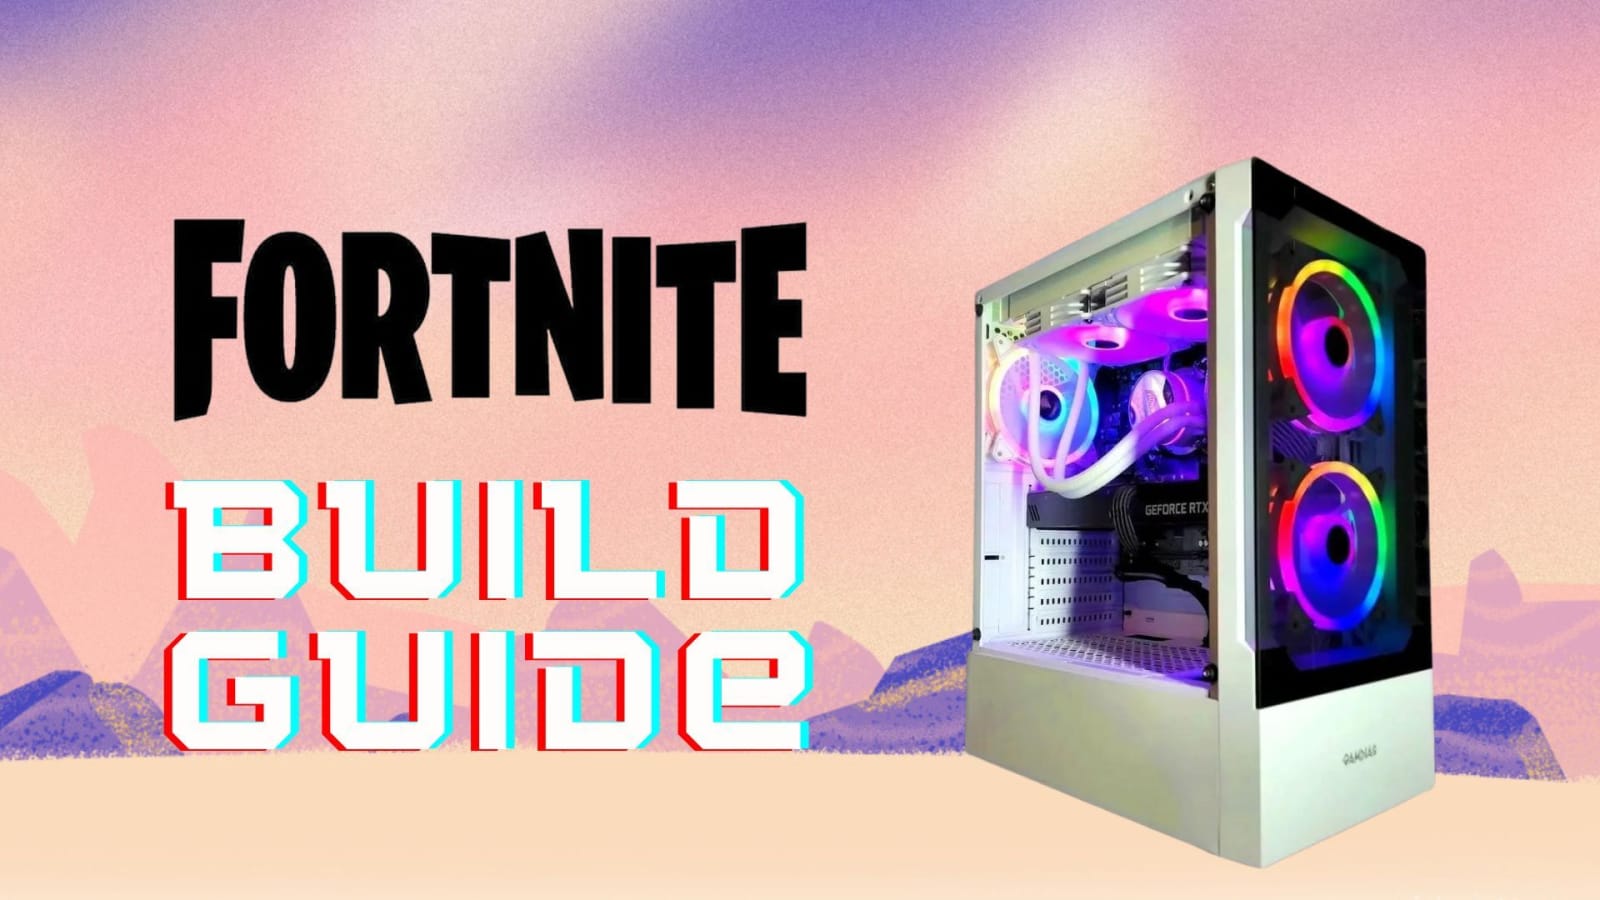 The $500 Fortnite PC Build Guide